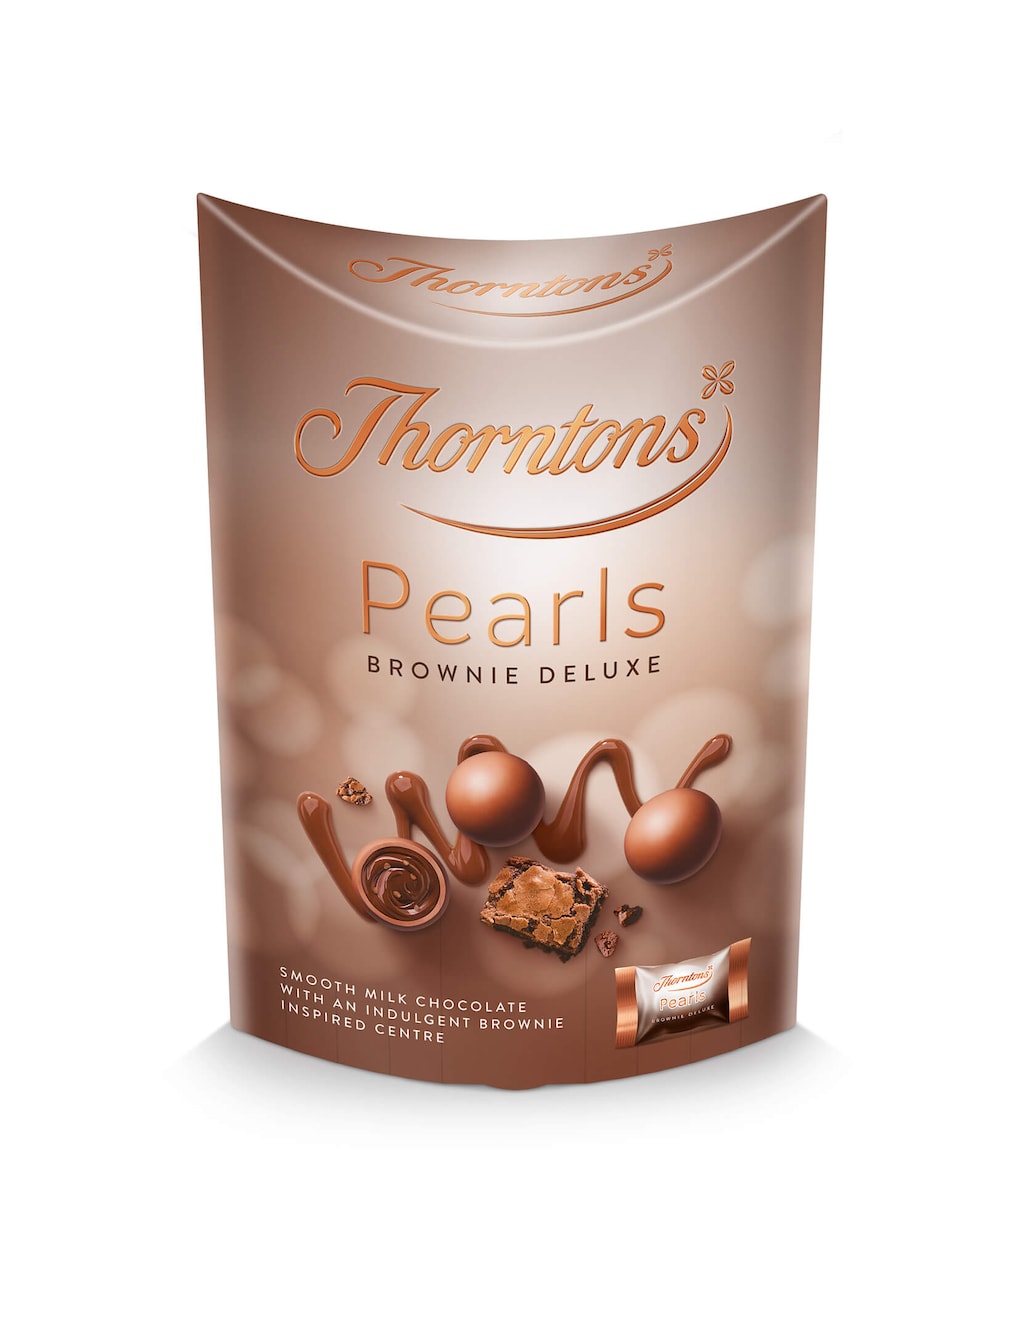 Thorntons Pearls Brownie Deluxe 167g